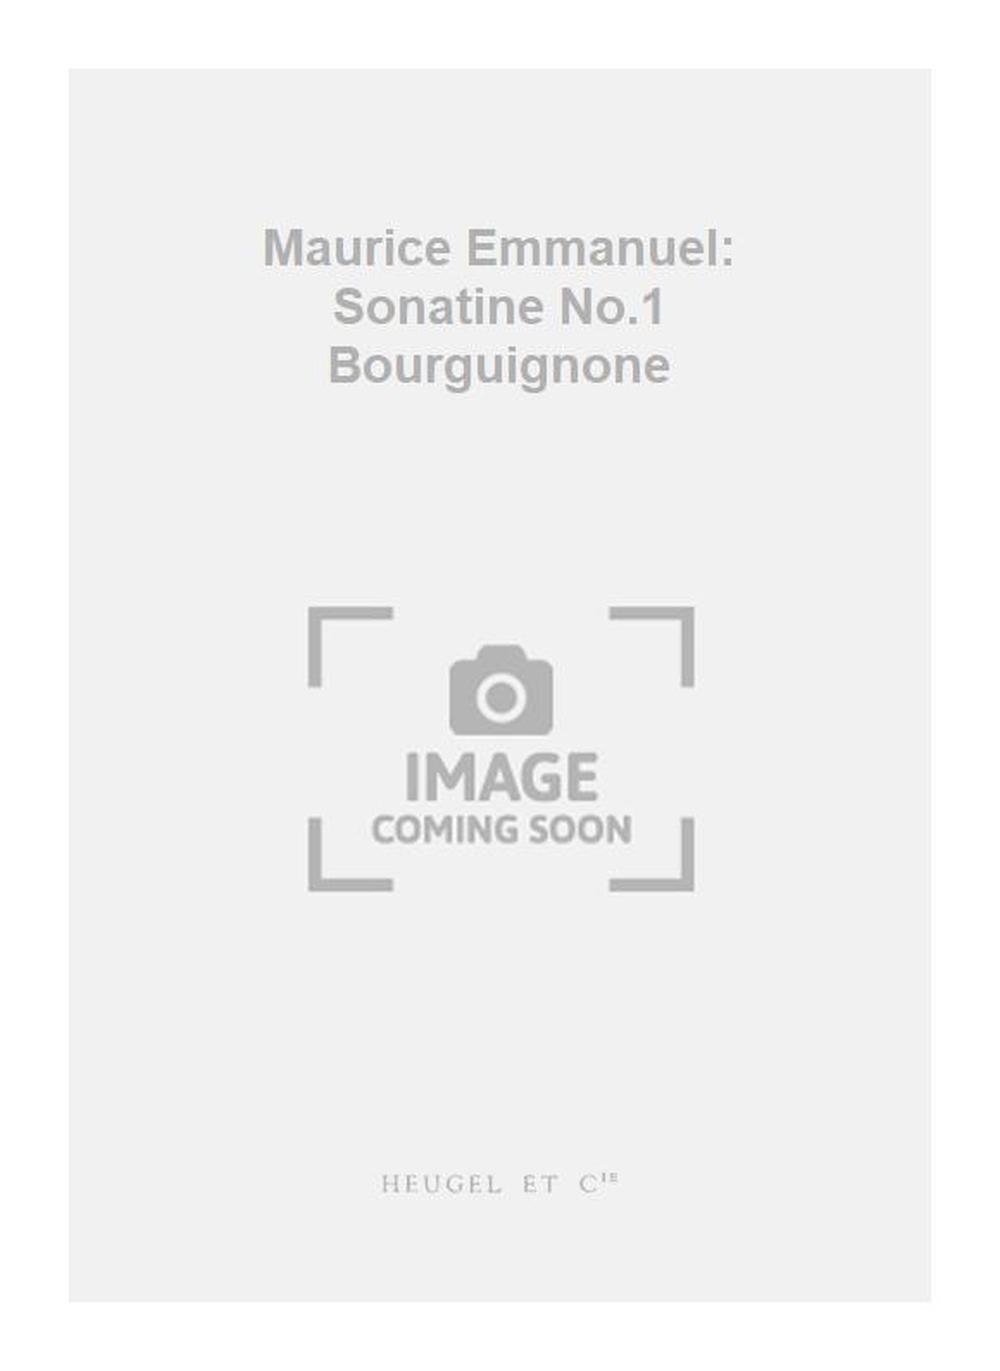 Maurice Emmanuel: Maurice Emmanuel: Sonatine No.1 Bourguignone